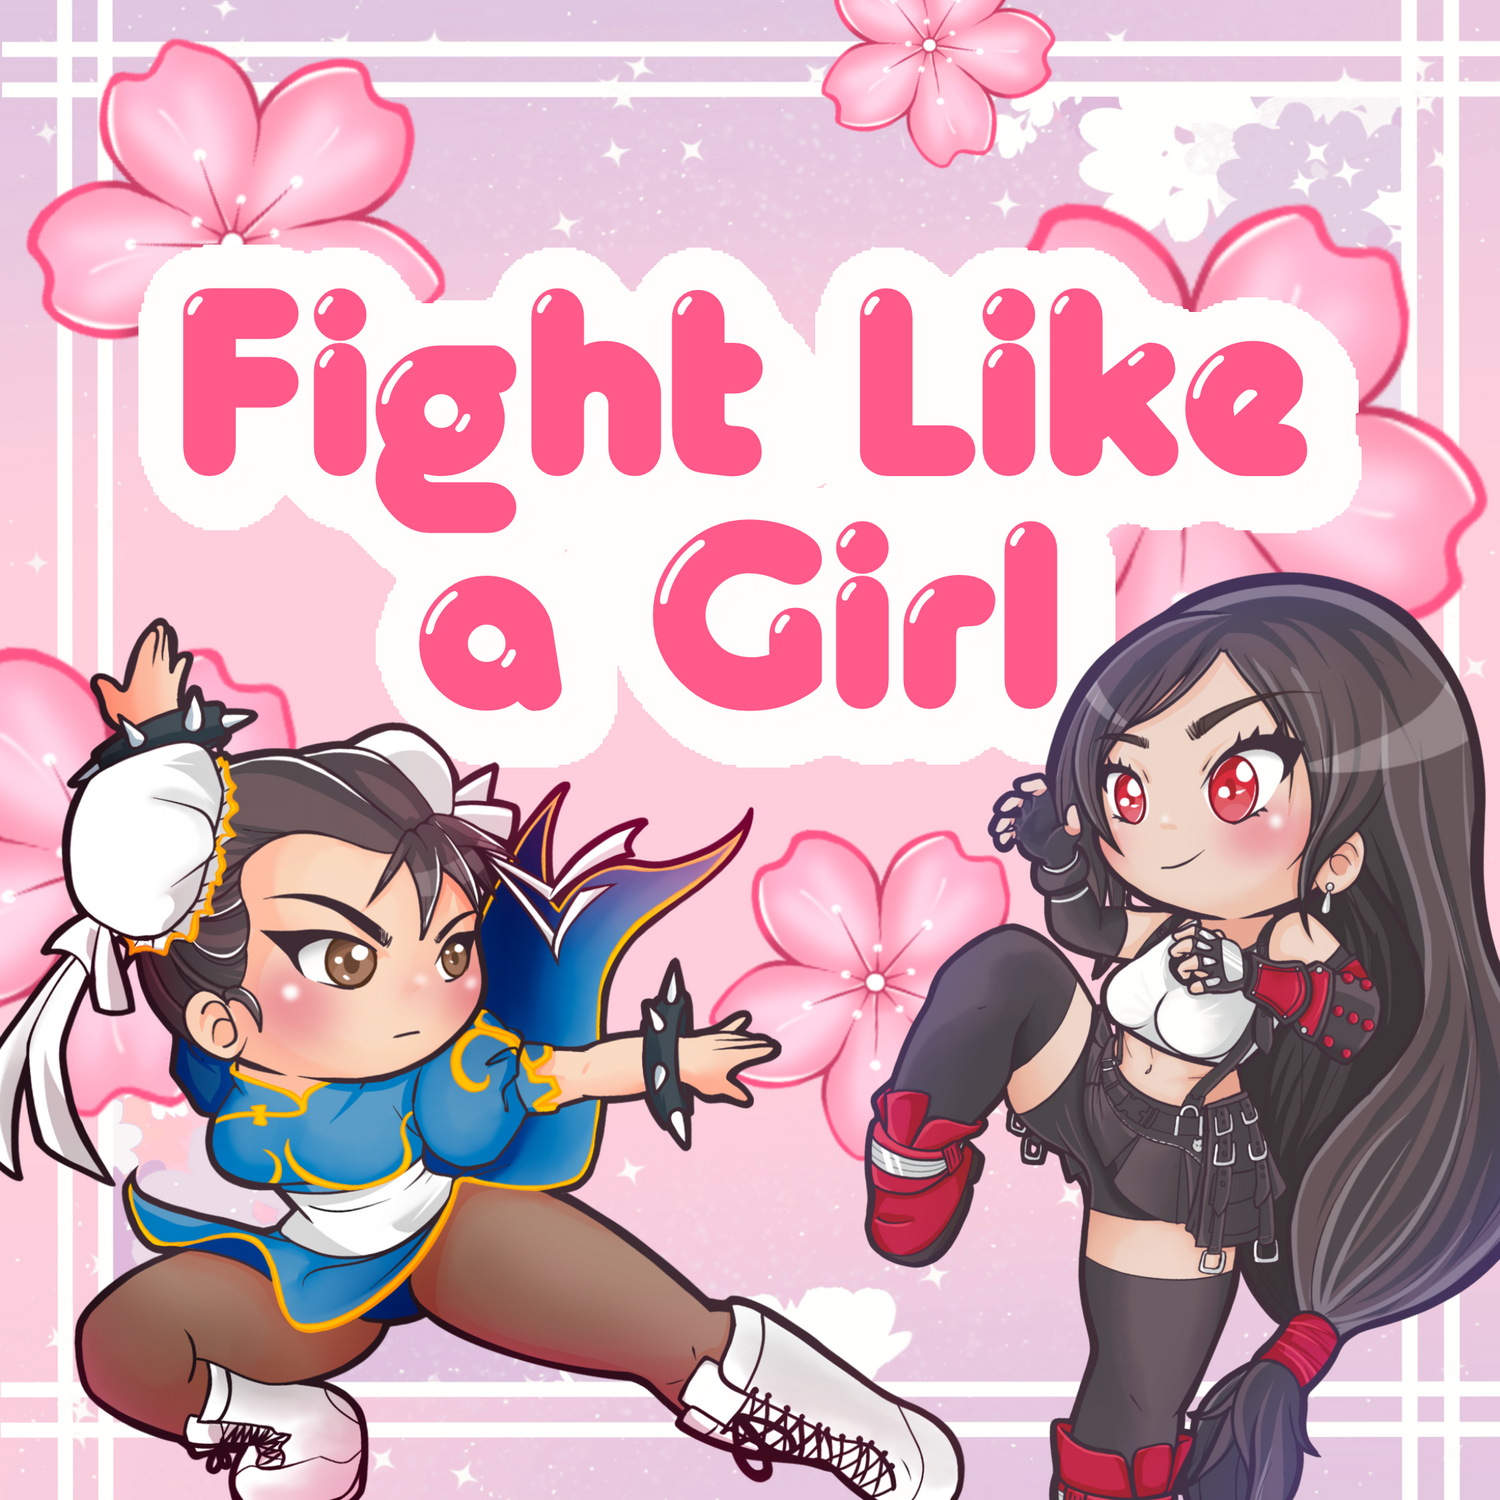 Fight Like a Girl!